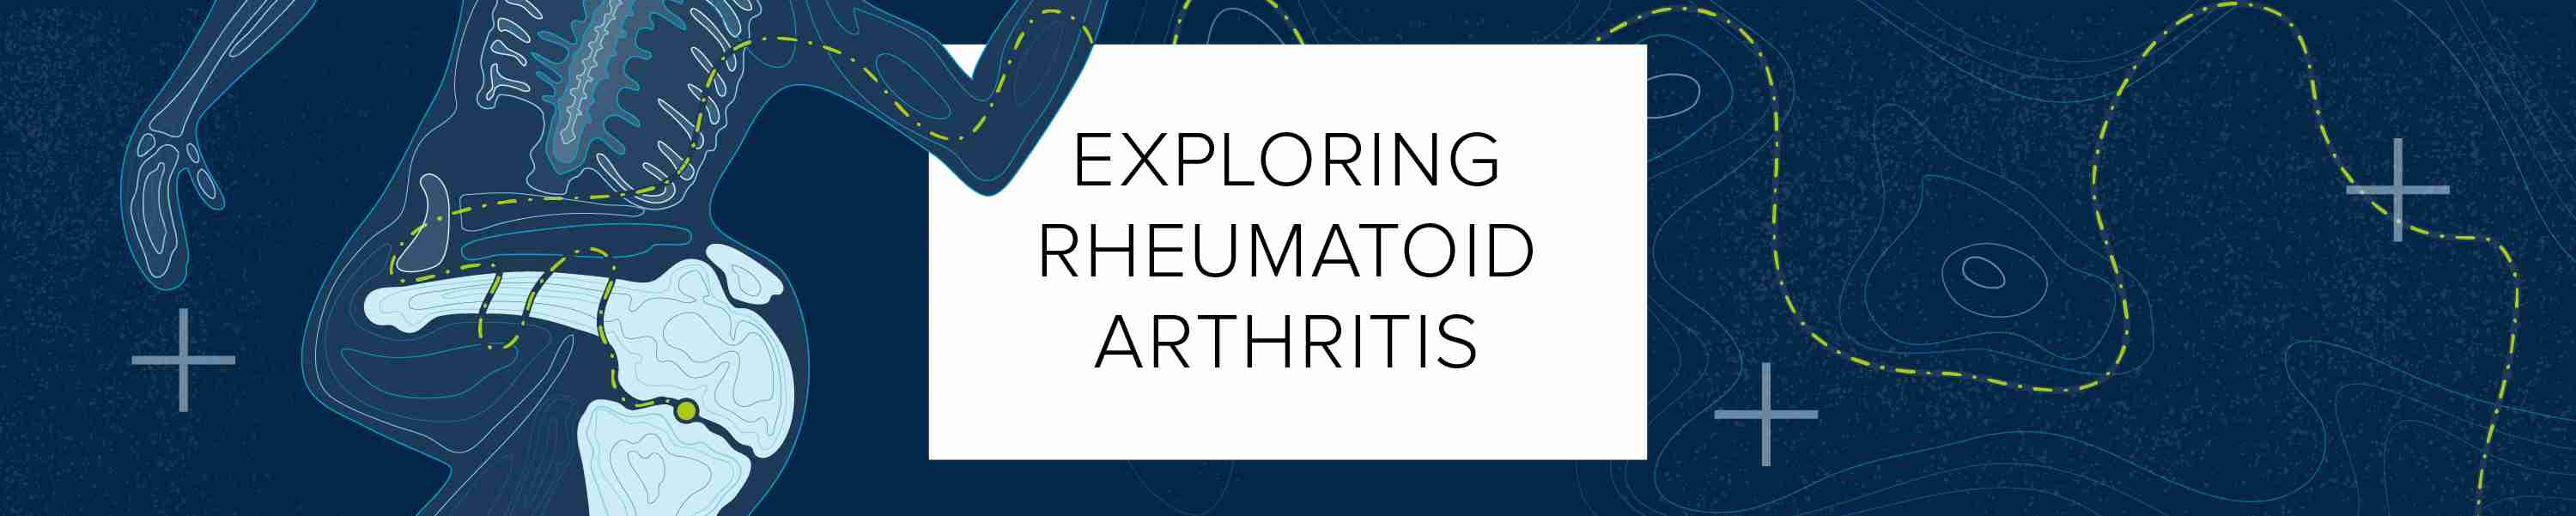 Exploring Rheumatoid Arthritis